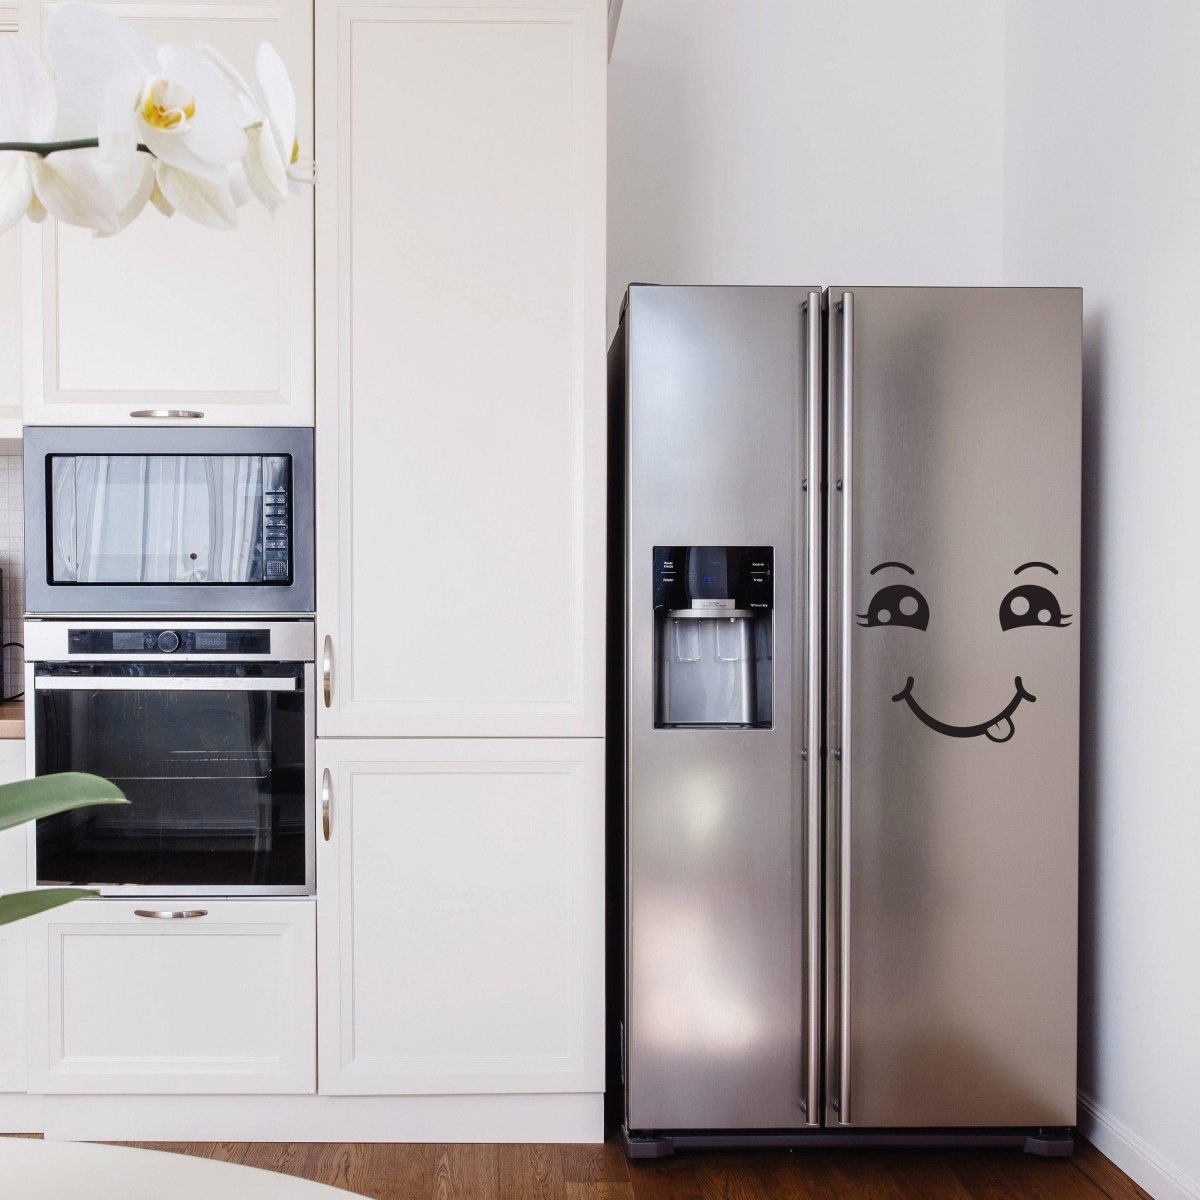 Refrigerator Smiley Face Decal - Happy Chef Smile Fridge Sticker 20